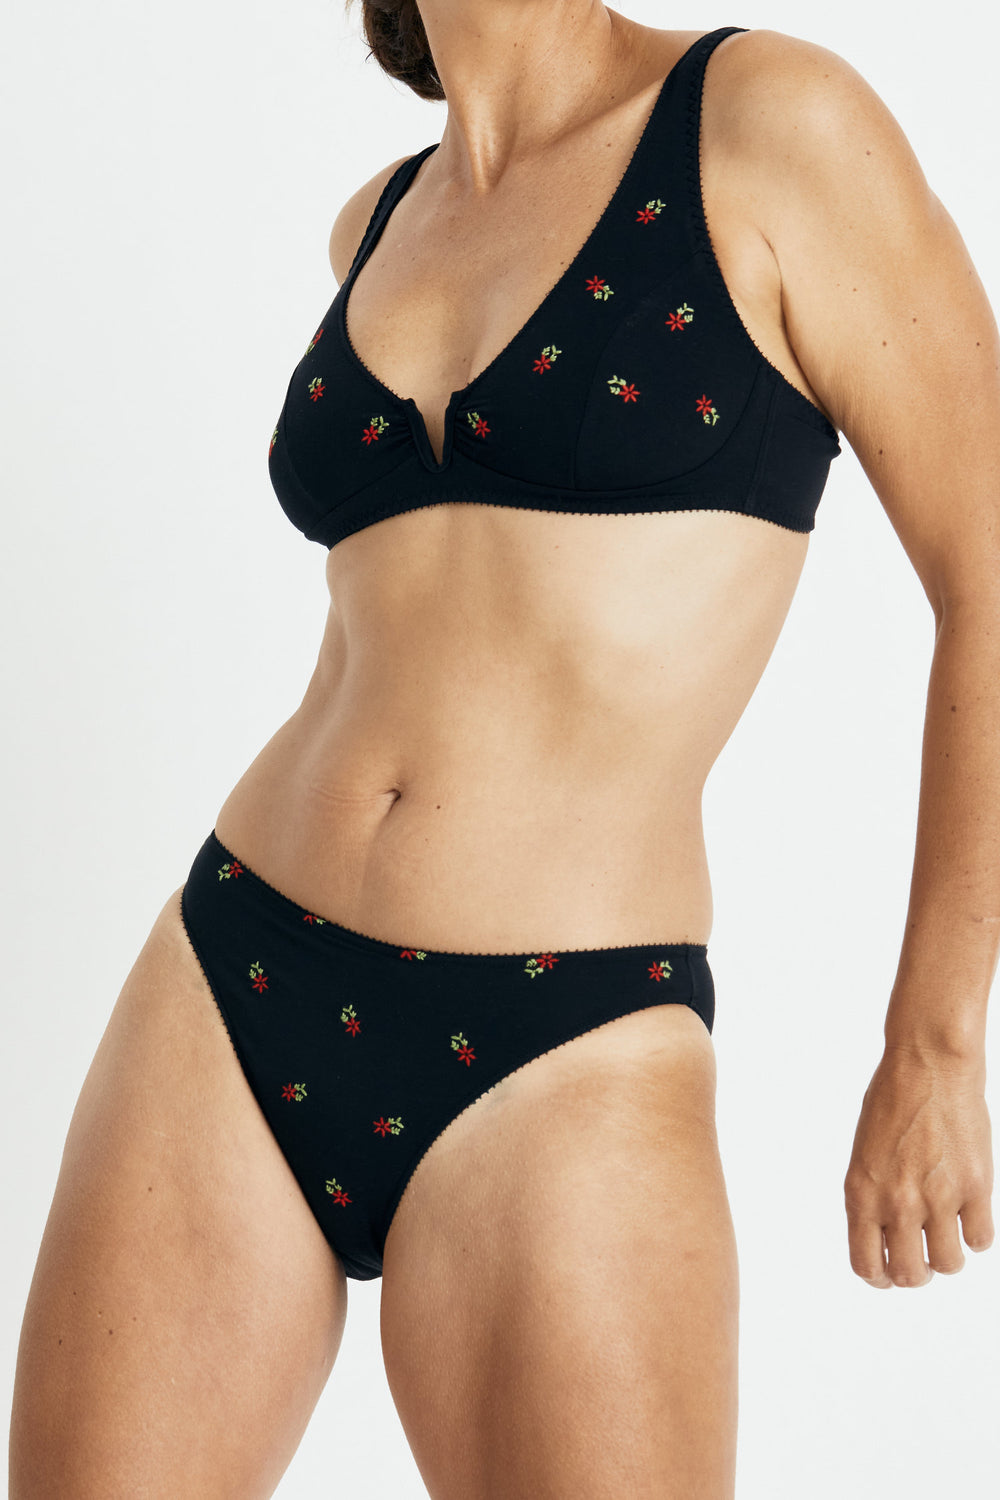 Videris Lingerie bikini knicker in black blossom embroidered TENCEL™  mid-rise styles with soft elastics